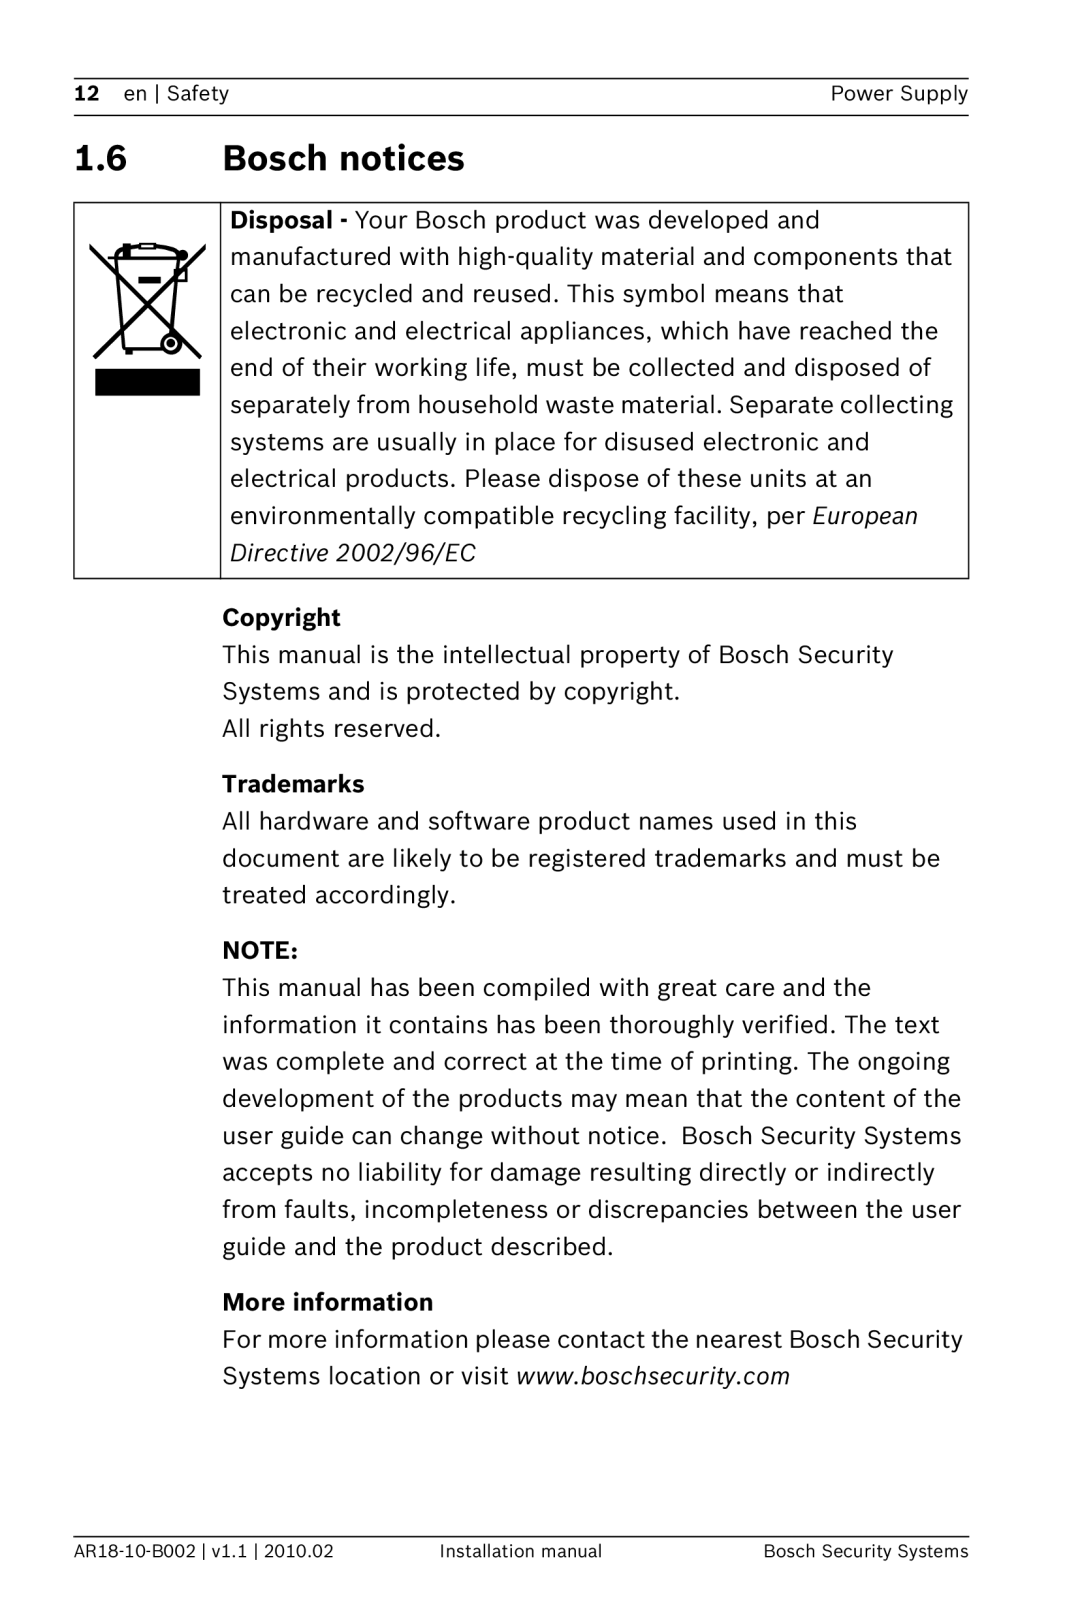 Bosch Appliances PSU-224-DC100 installation manual Bosch notices, Copyright, Trademarks, More information 